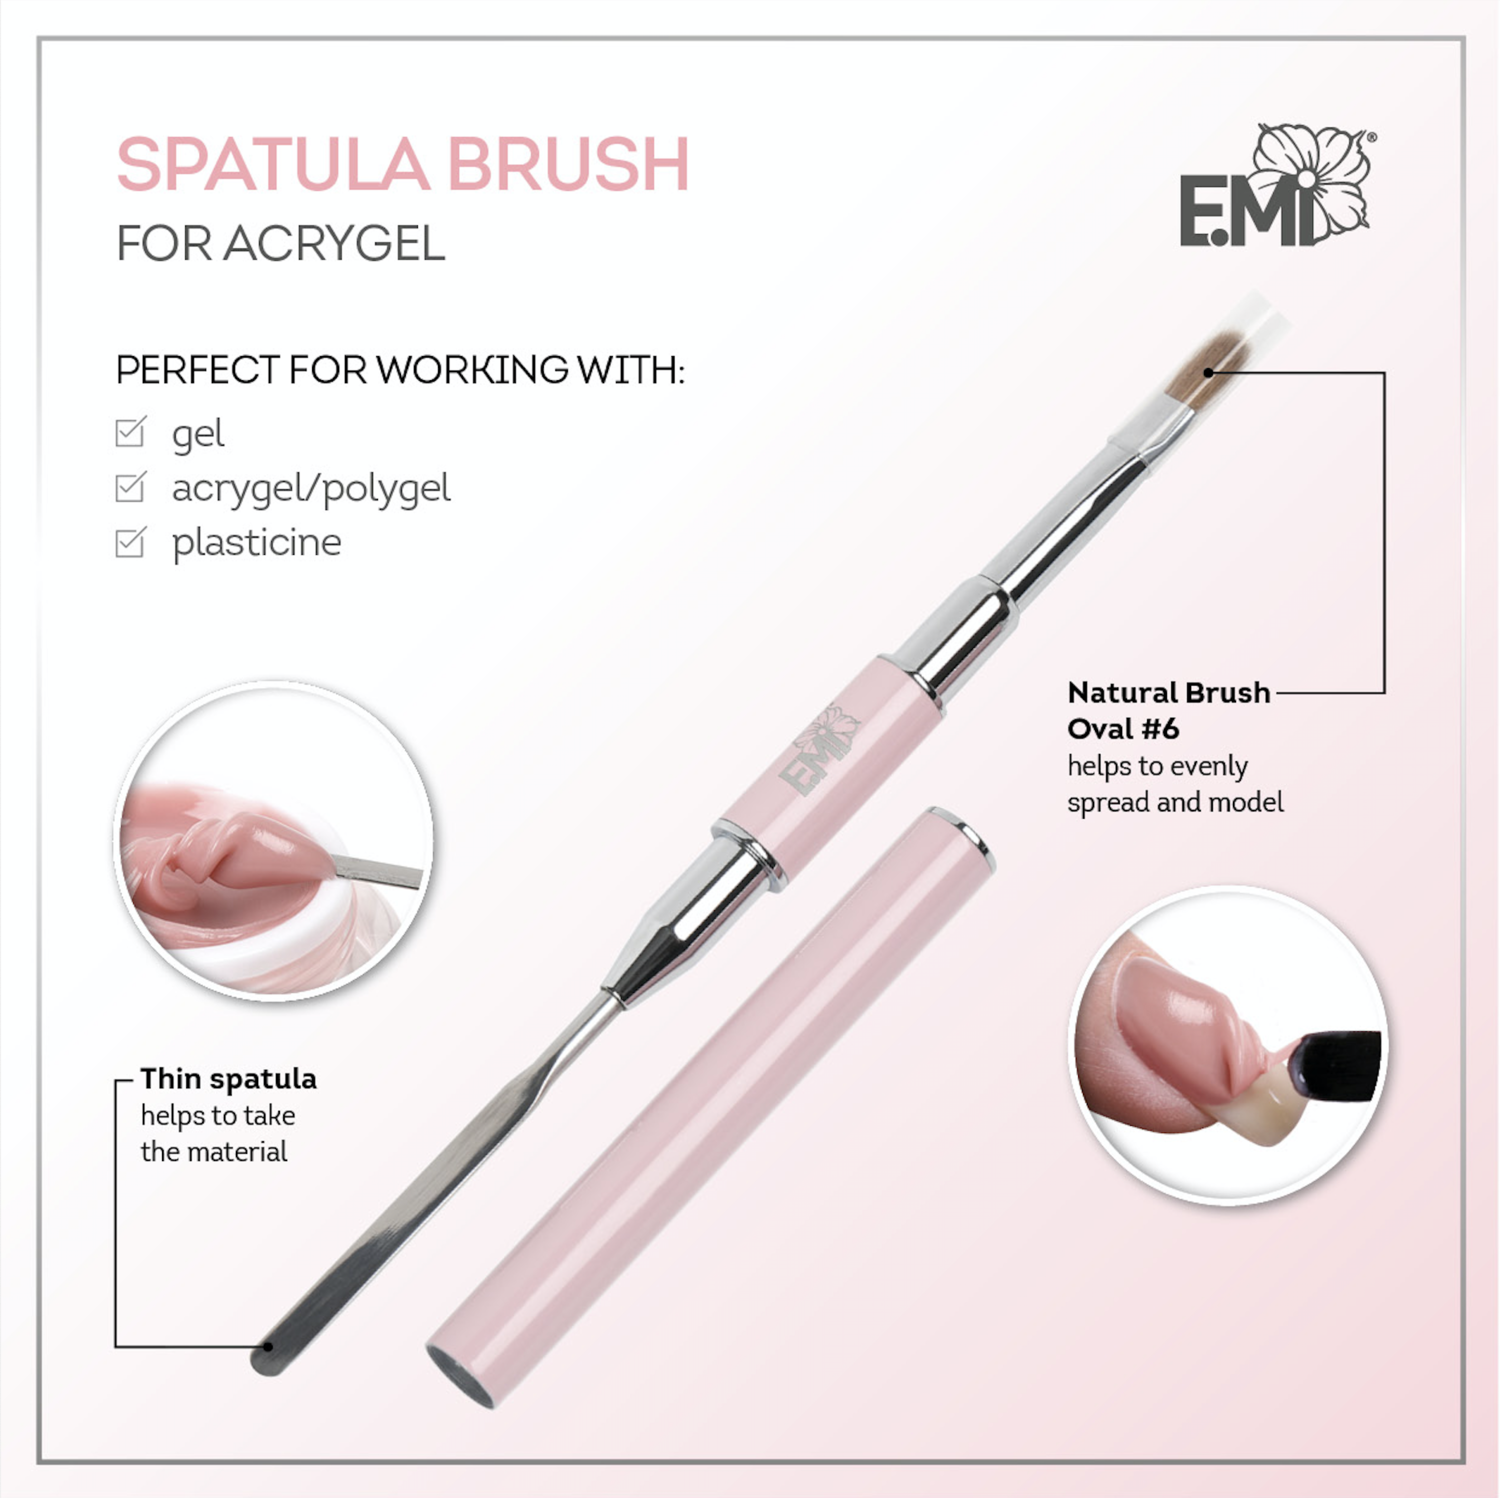 Spatula Brush for acrygel